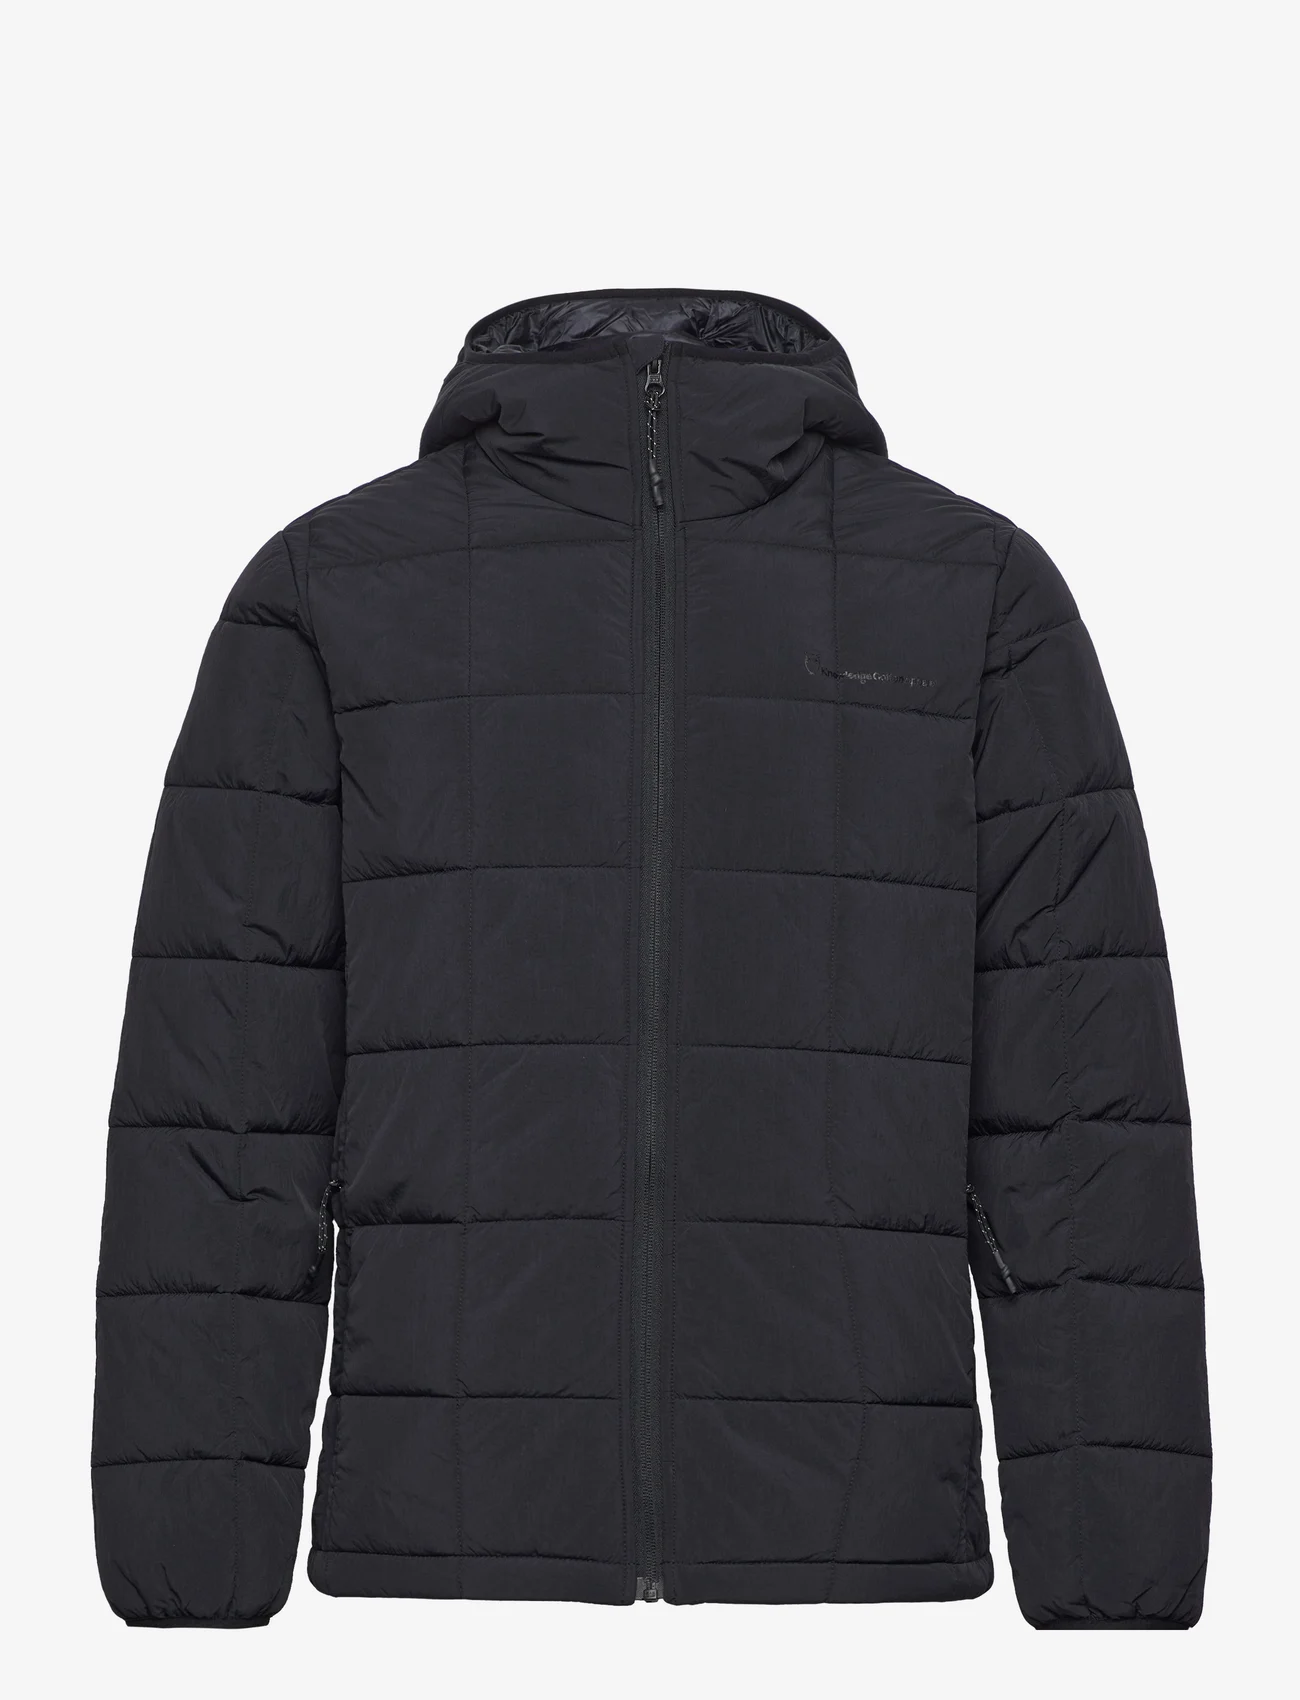 Knowledge Cotton Apparel - GO ANYWEAR quilted padded jacket - - winterjacken - black jet - 0